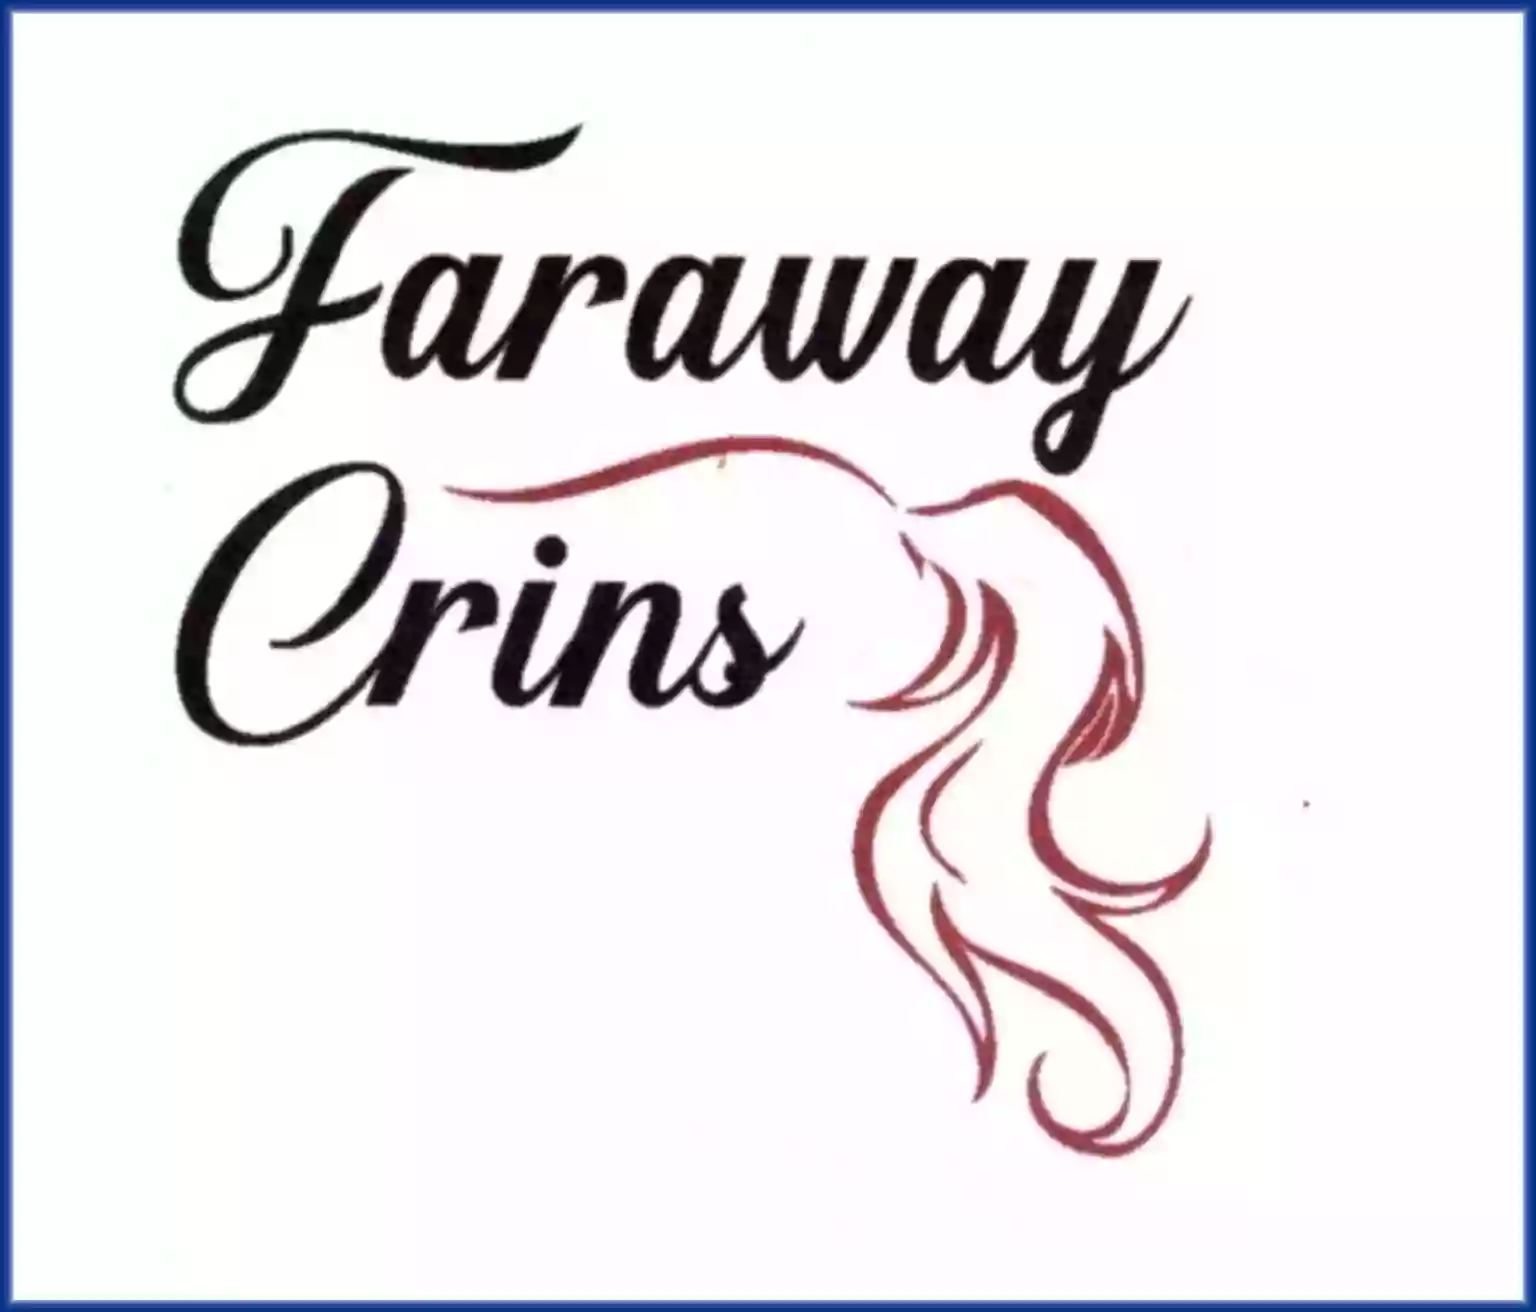 Faraway'Crins